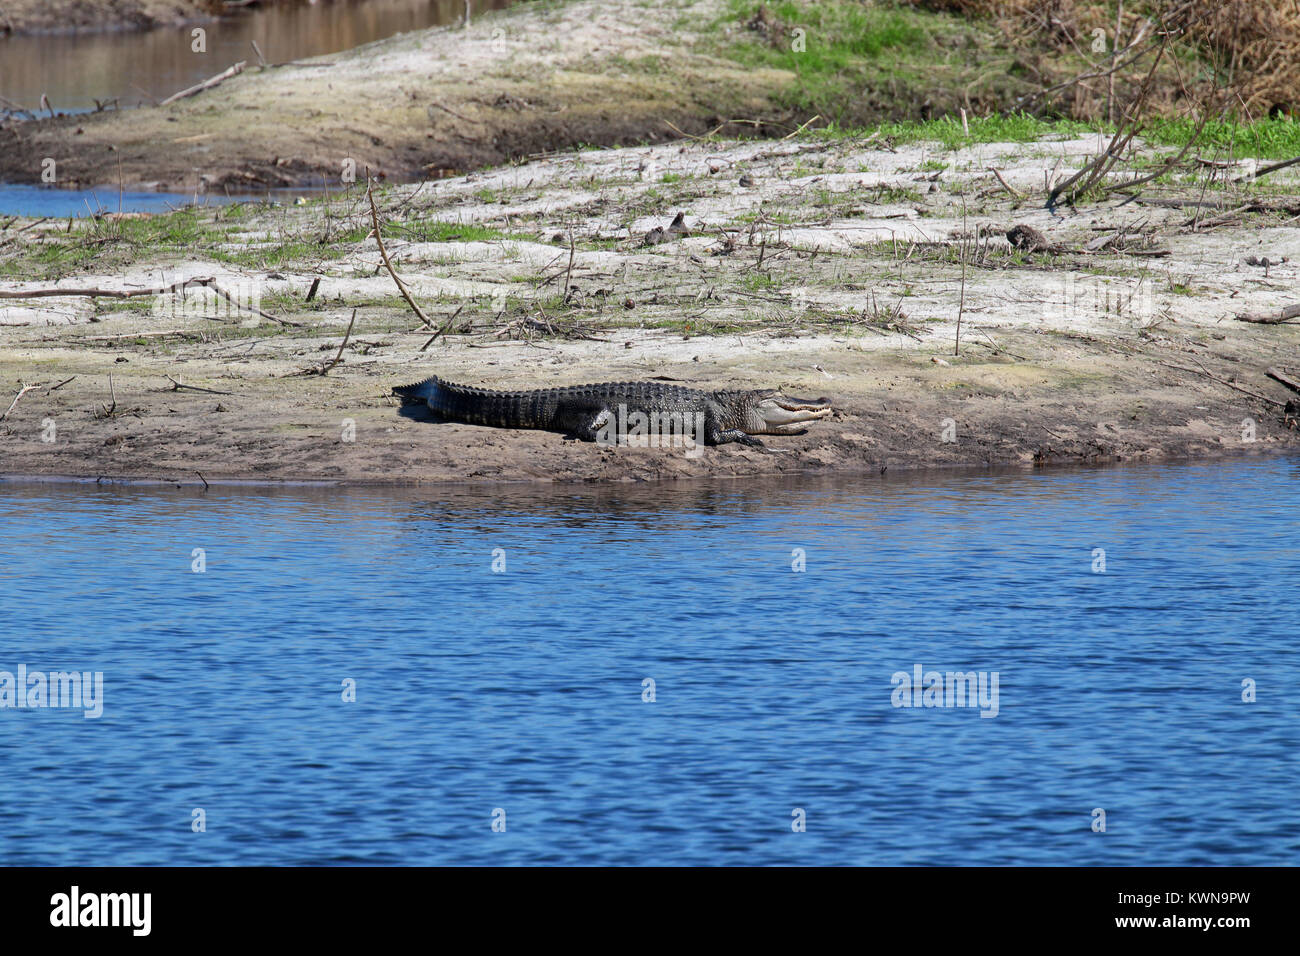 American alligator sunbathing on the river bank at Myakka River State Park Florida Stock Photo